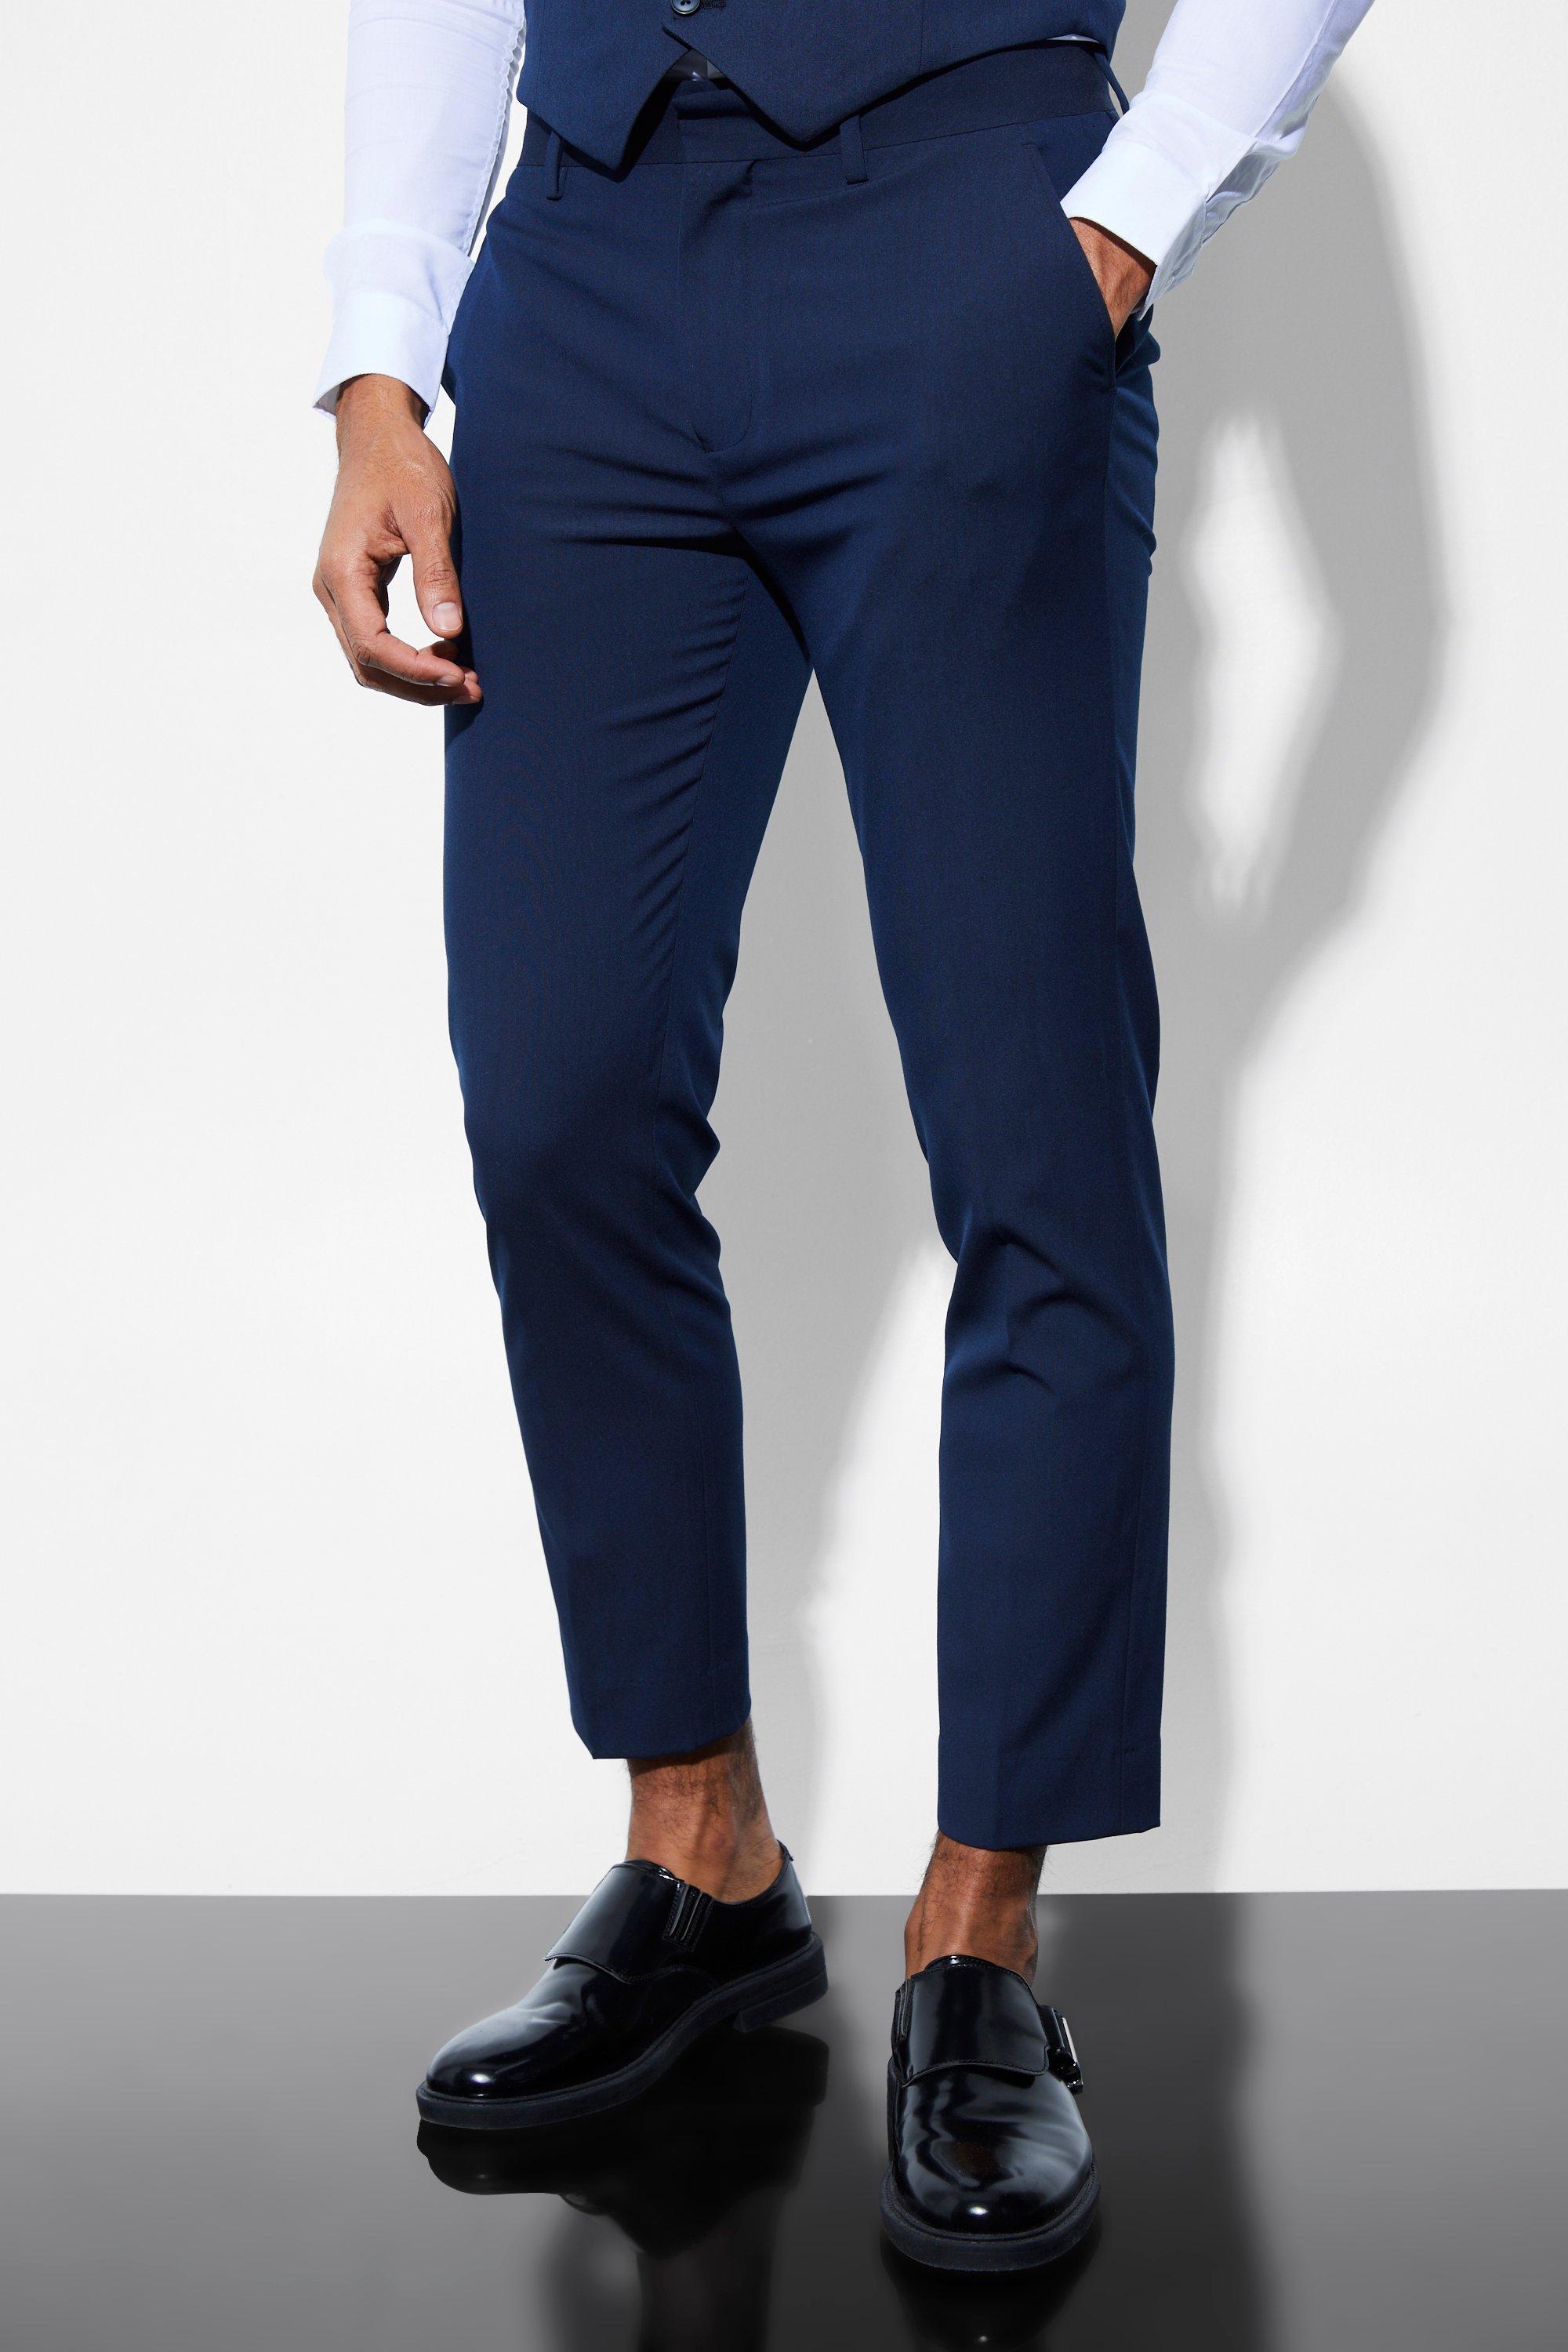 pantalon de costume skinny court homme - bleu - 30r, bleu